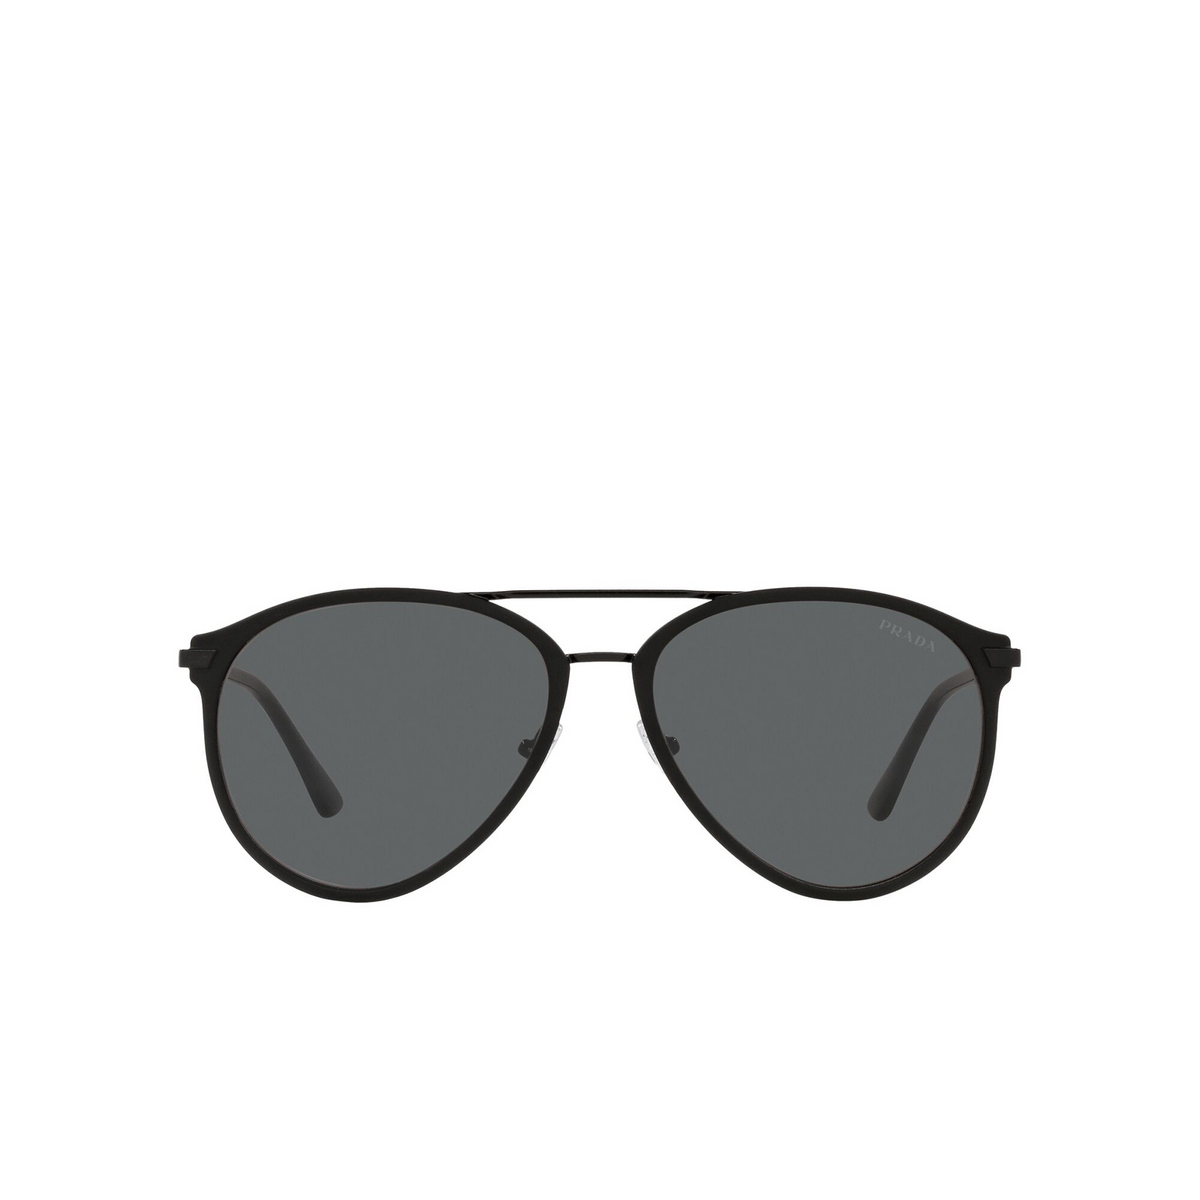 Prada® Aviator Sunglasses: PR 51WS color Matte Black / Black 07F731 - front view.